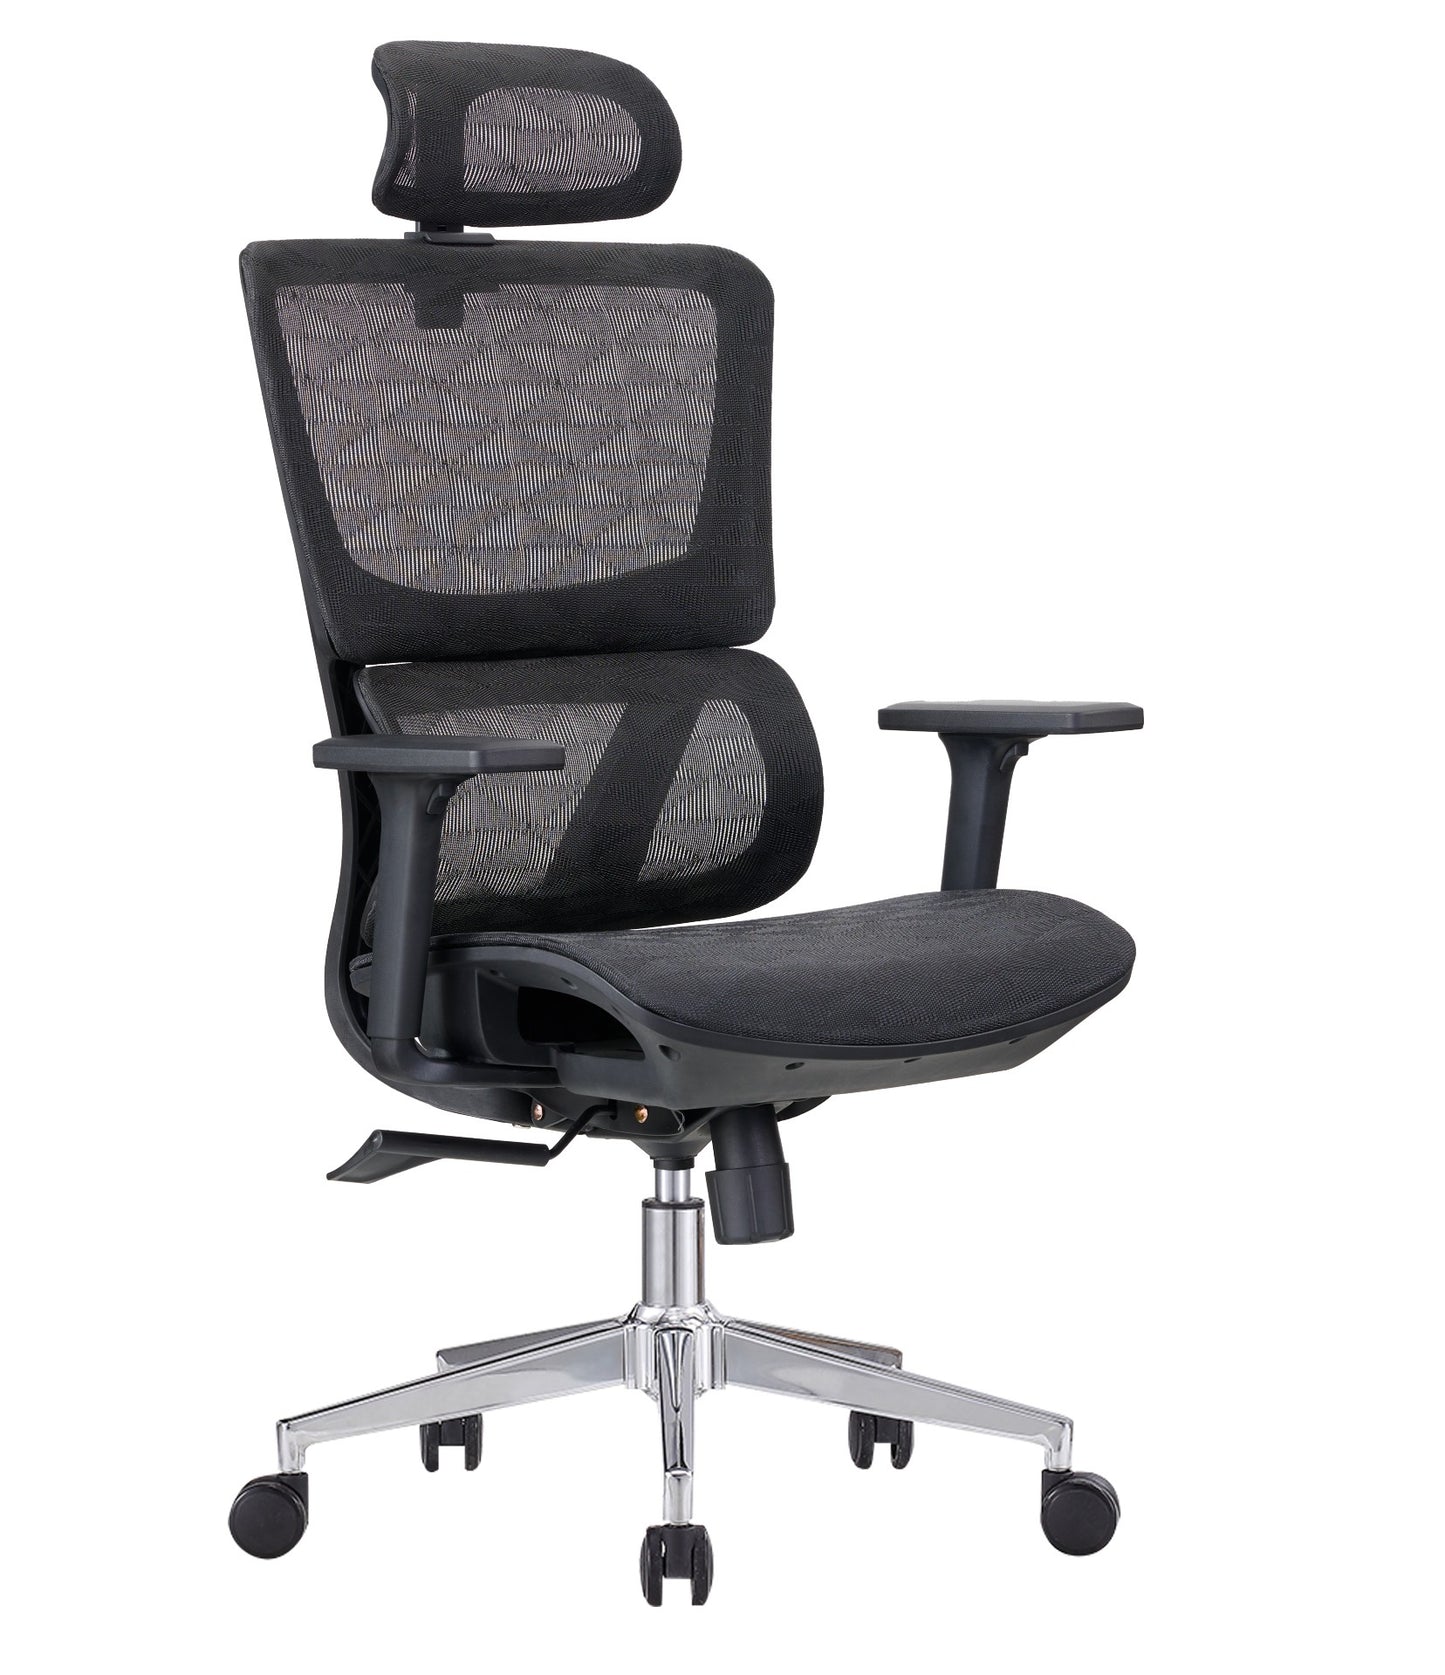 Full Mesh Seat Professional Chair